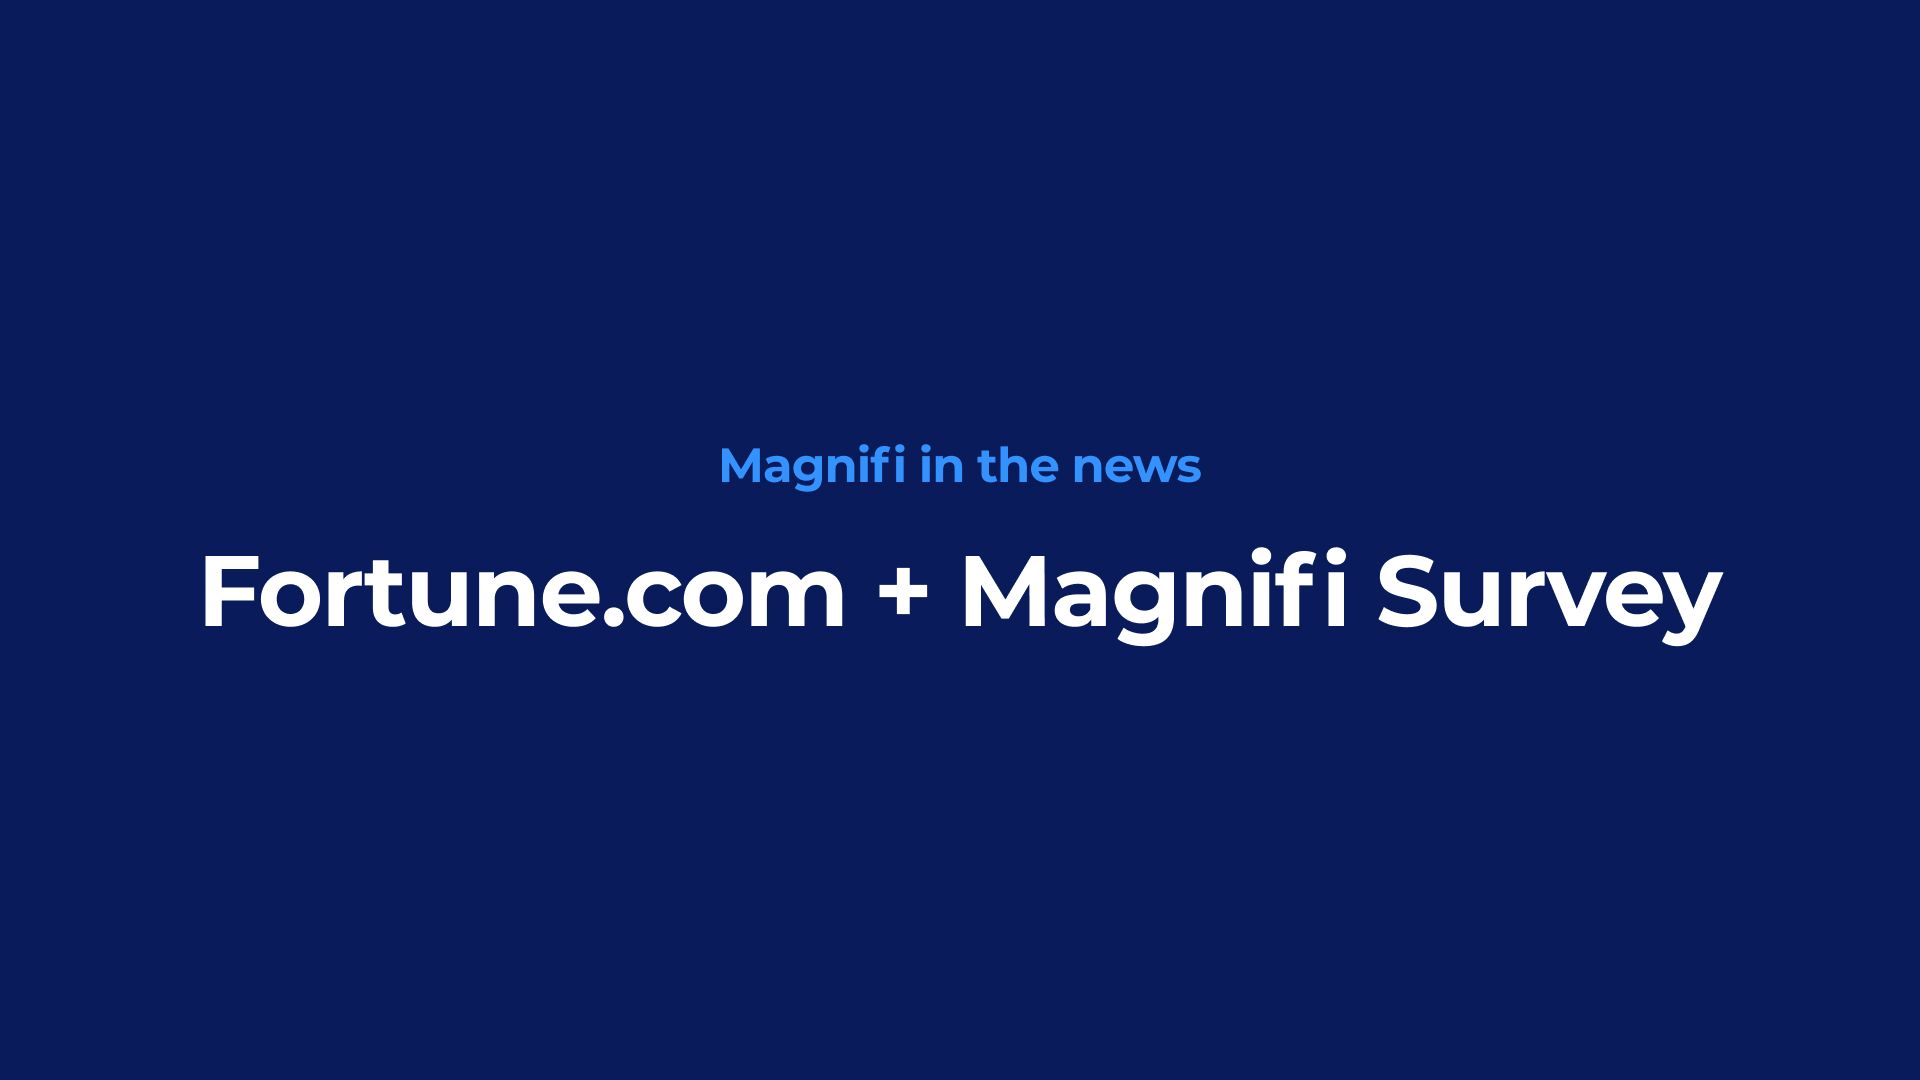 "Magnifi in the news
Fortune.com + Magnifi Survey"